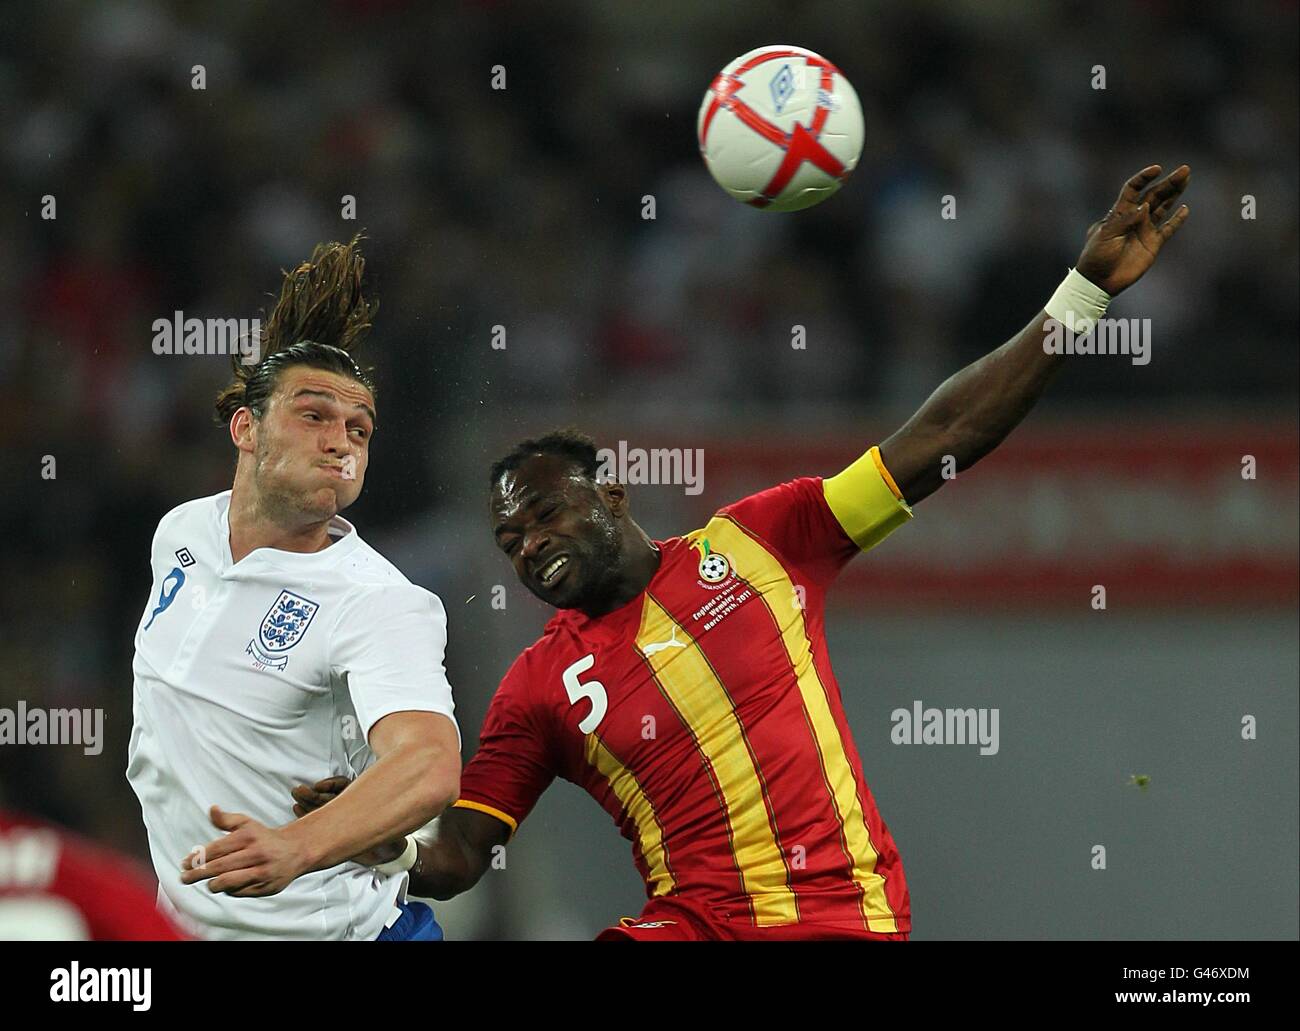 Soccer - International Friendly - England v Ghana - Wembley Stadium. England's Andrew Carroll (left) and Ghana's John Mensah battle for the ball Stock Photo